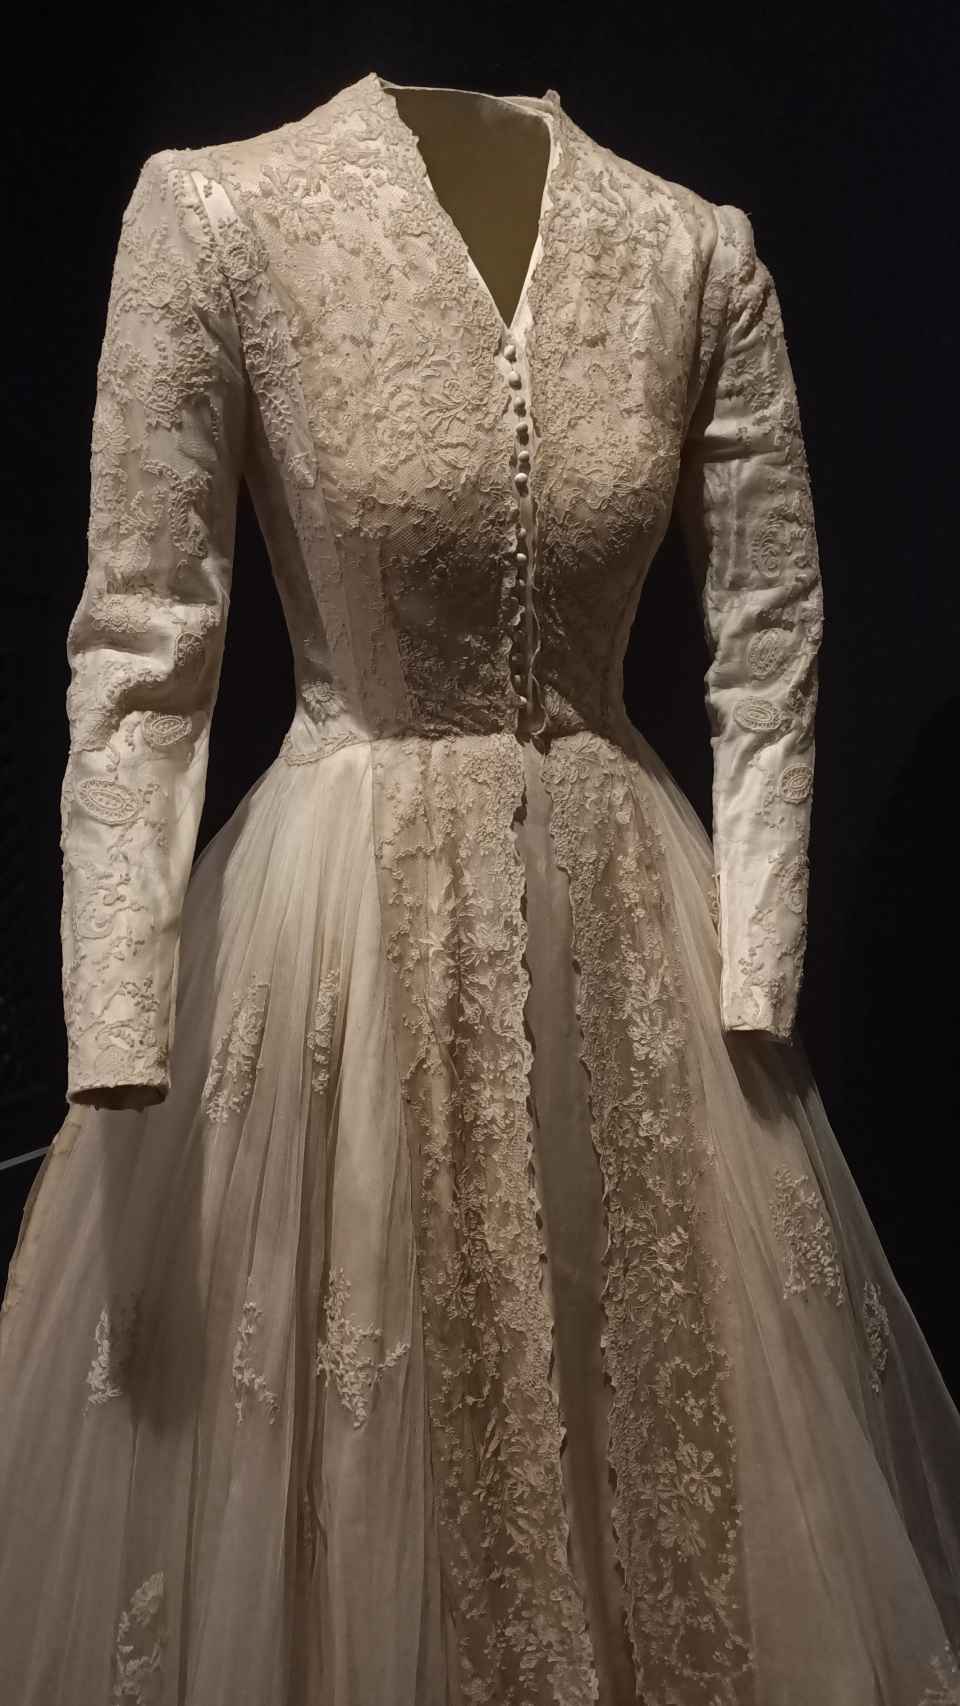 Vestido de novia de Cayetana Fitz-James Stuart, XVIII duquesa de Alba.